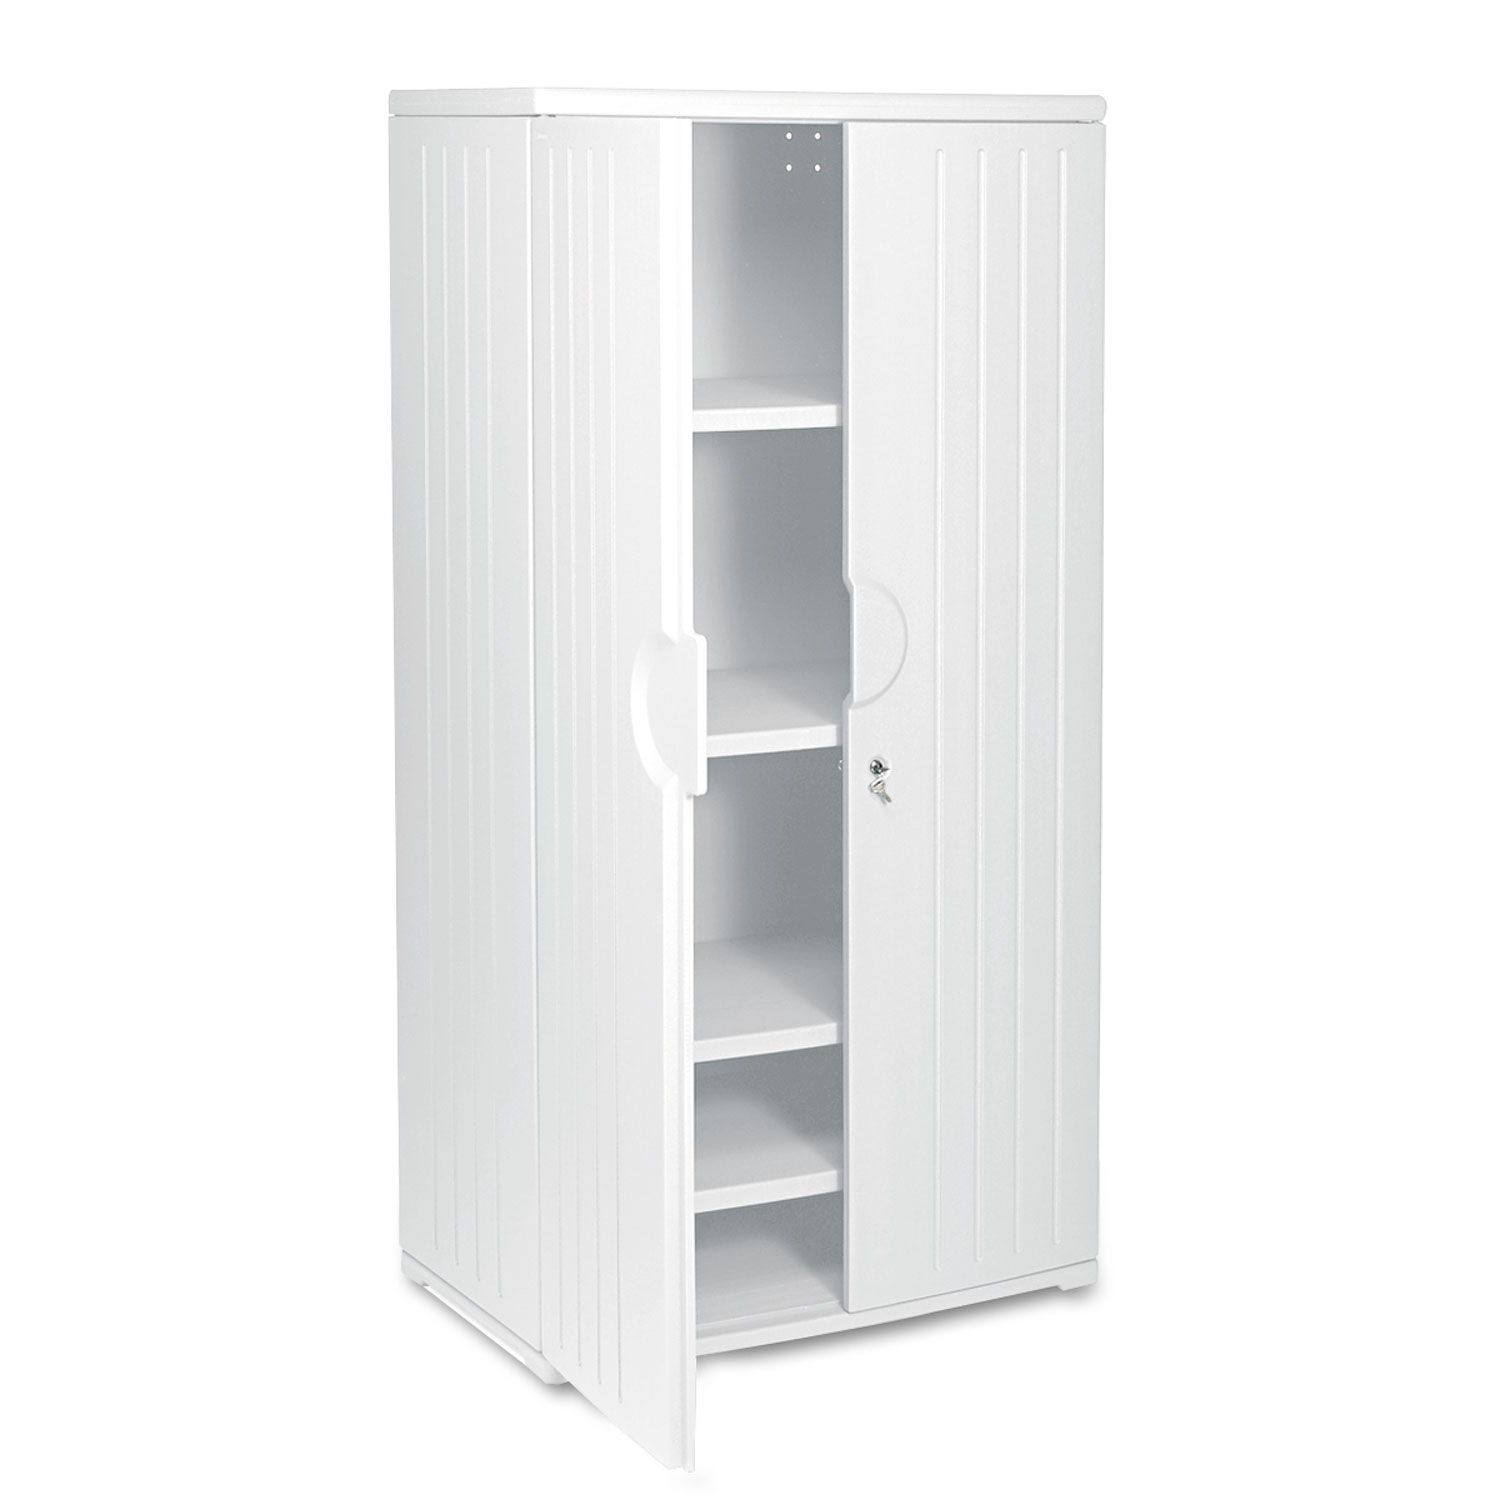  Iceberg 92573 OfficeWorks Resin Storage Cabinet, 36w x 22d x 72h, Platinum (ICE92573) 